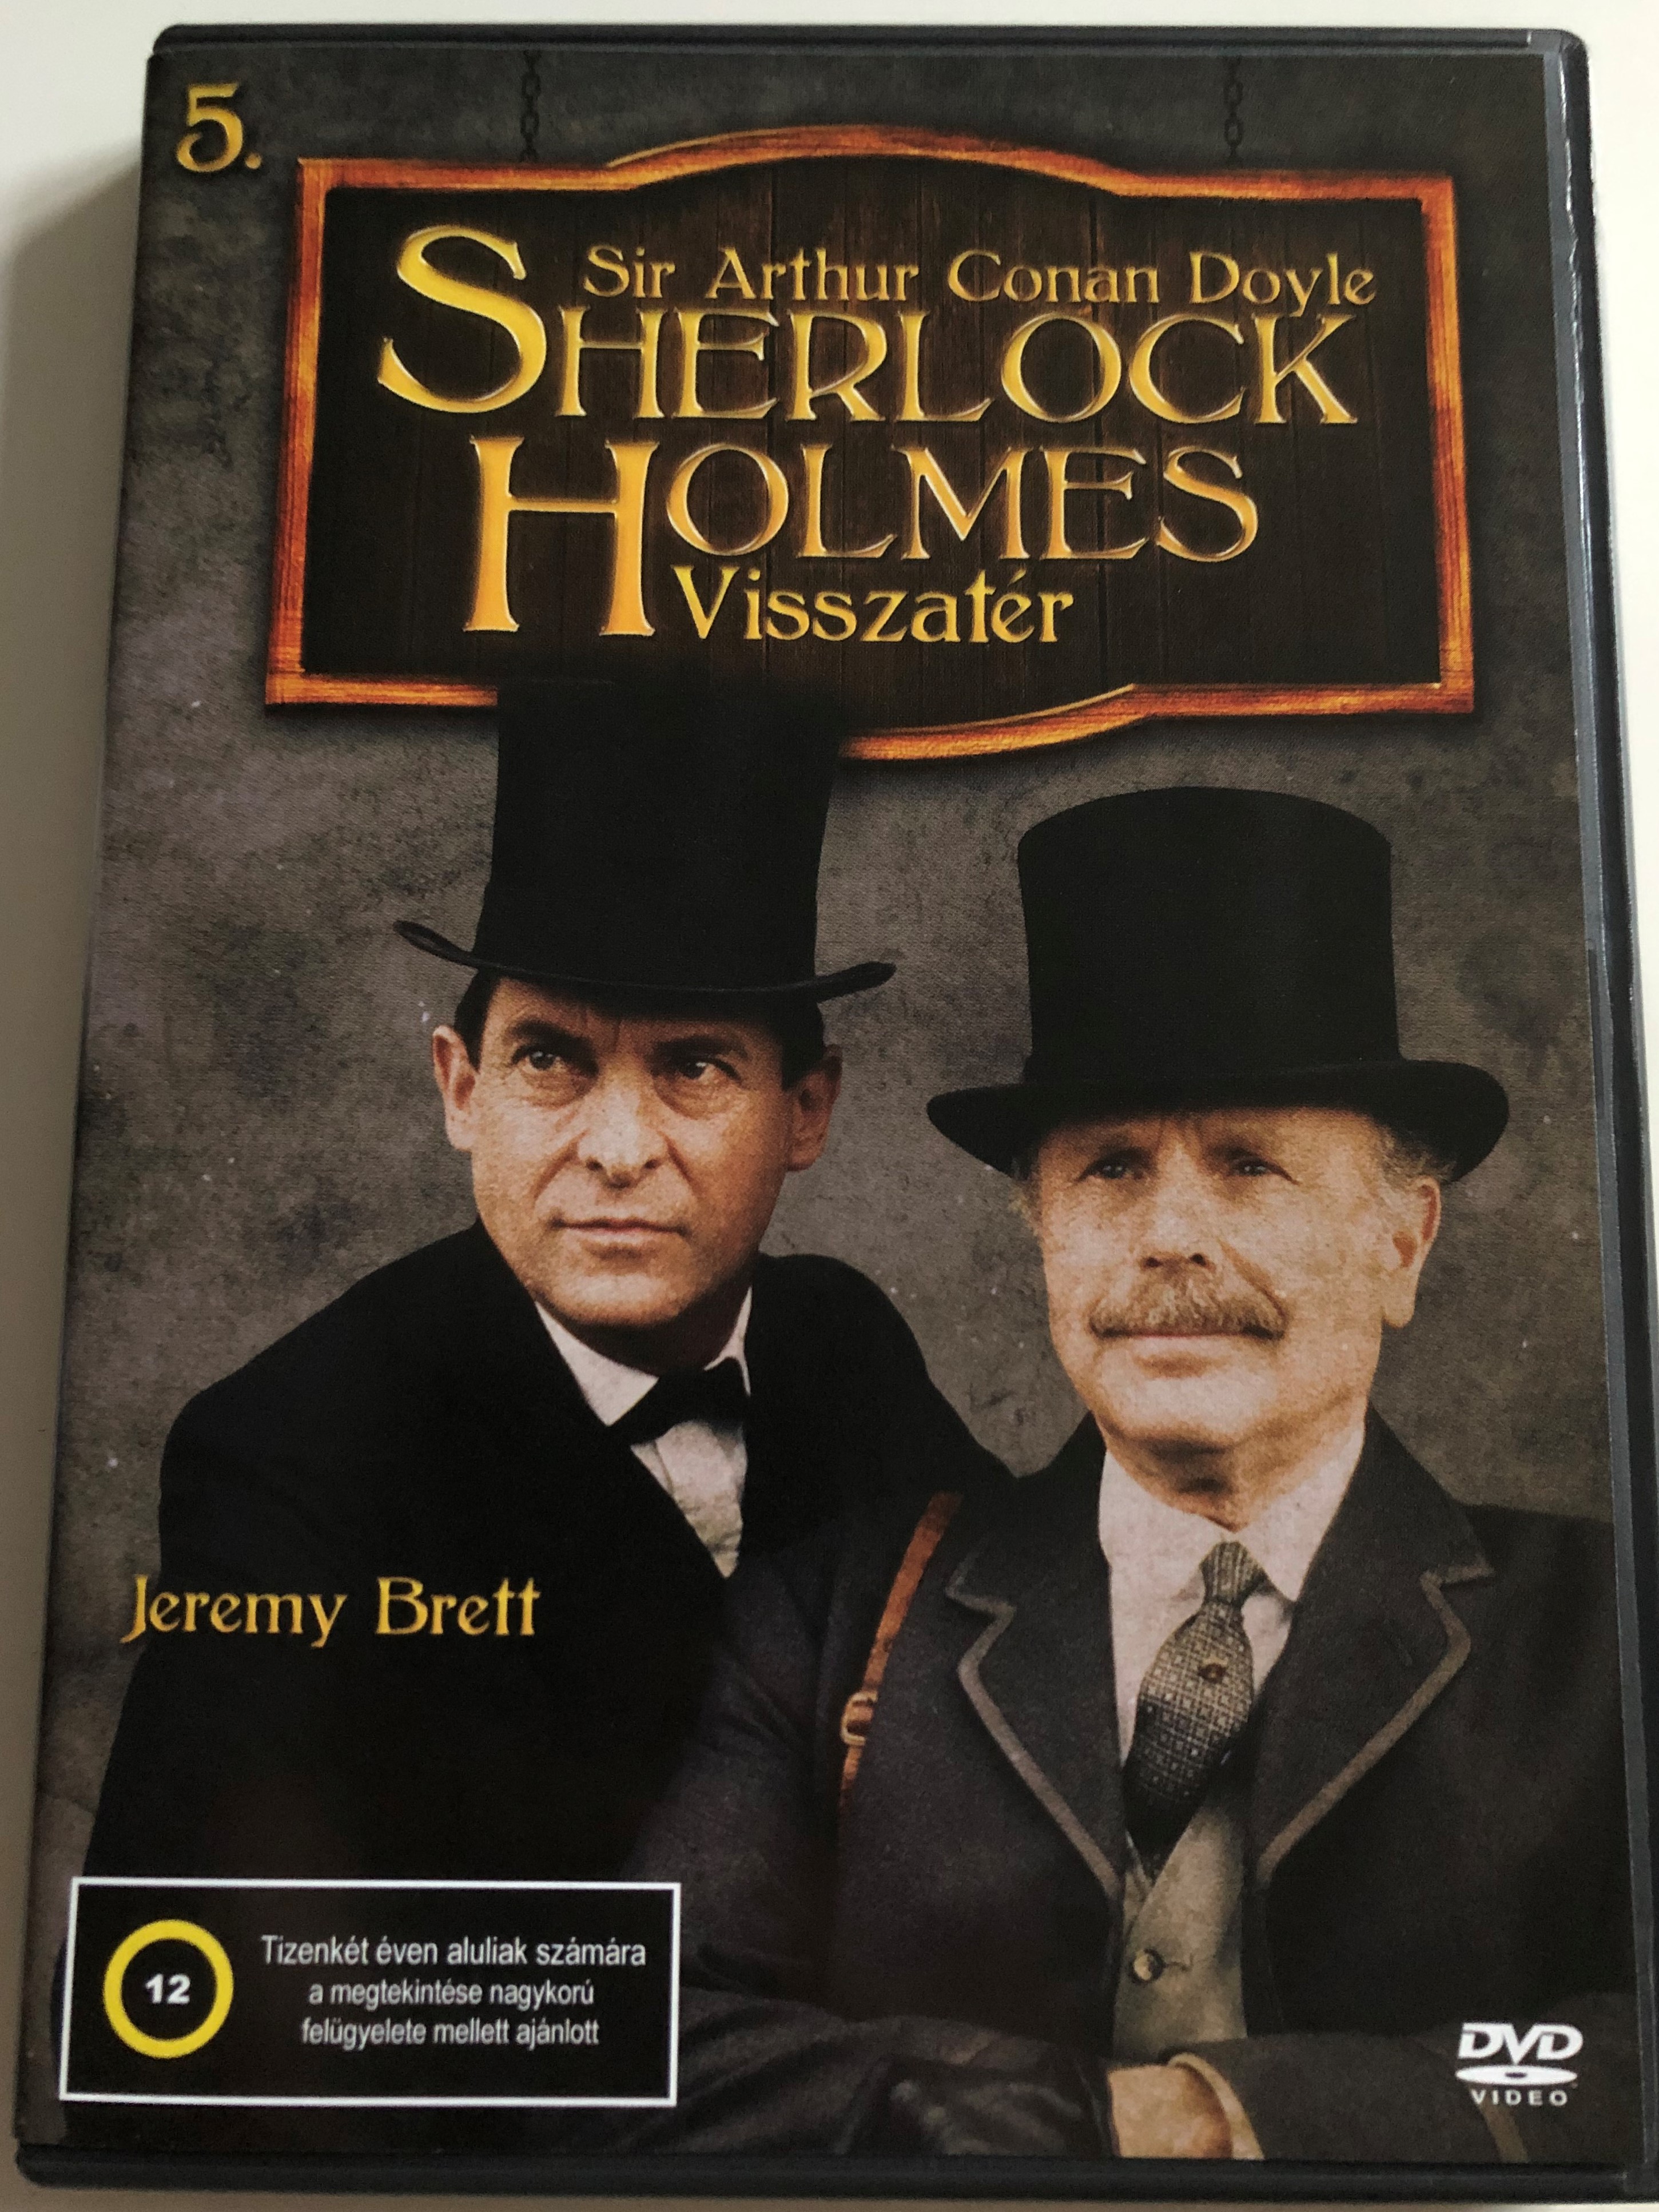 the-return-of-sherlock-holmes-5.-dvd-1986-sherlock-holmes-visszat-r-5.-directed-by-peter-hammond-howard-baker-written-by-sir-arthur-conan-doyle-1-.jpg